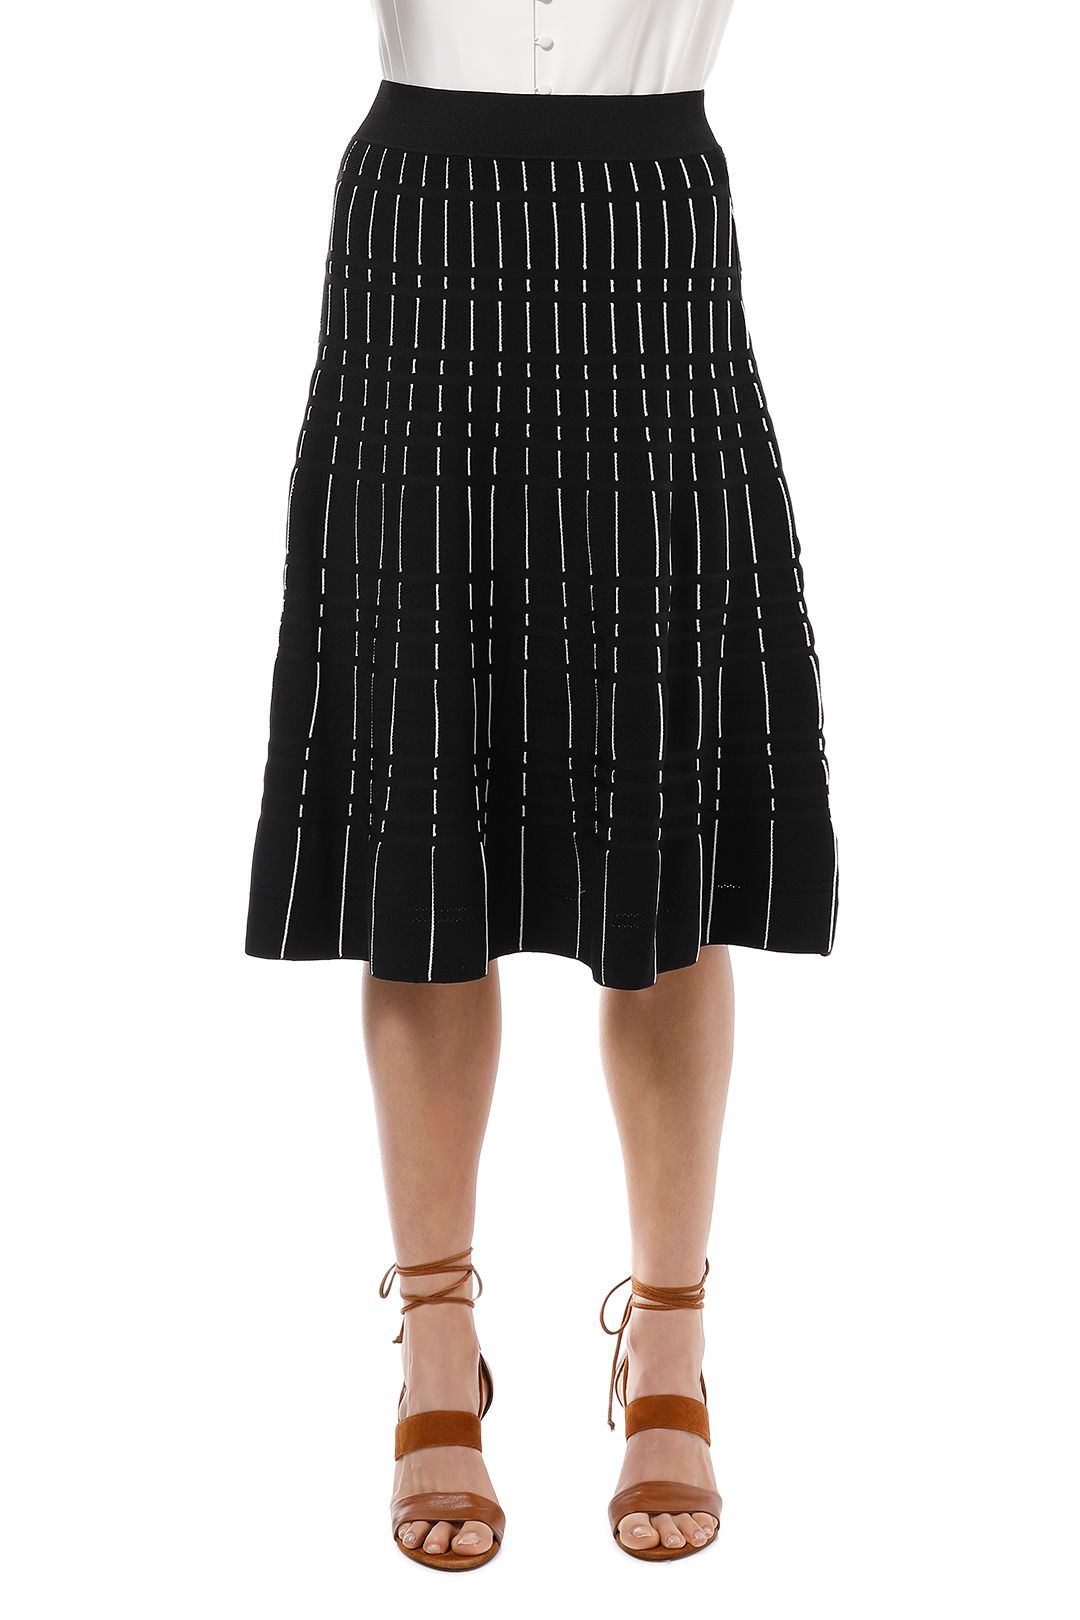 Saba - Milly Milano Skirt - Black White - Front Crop